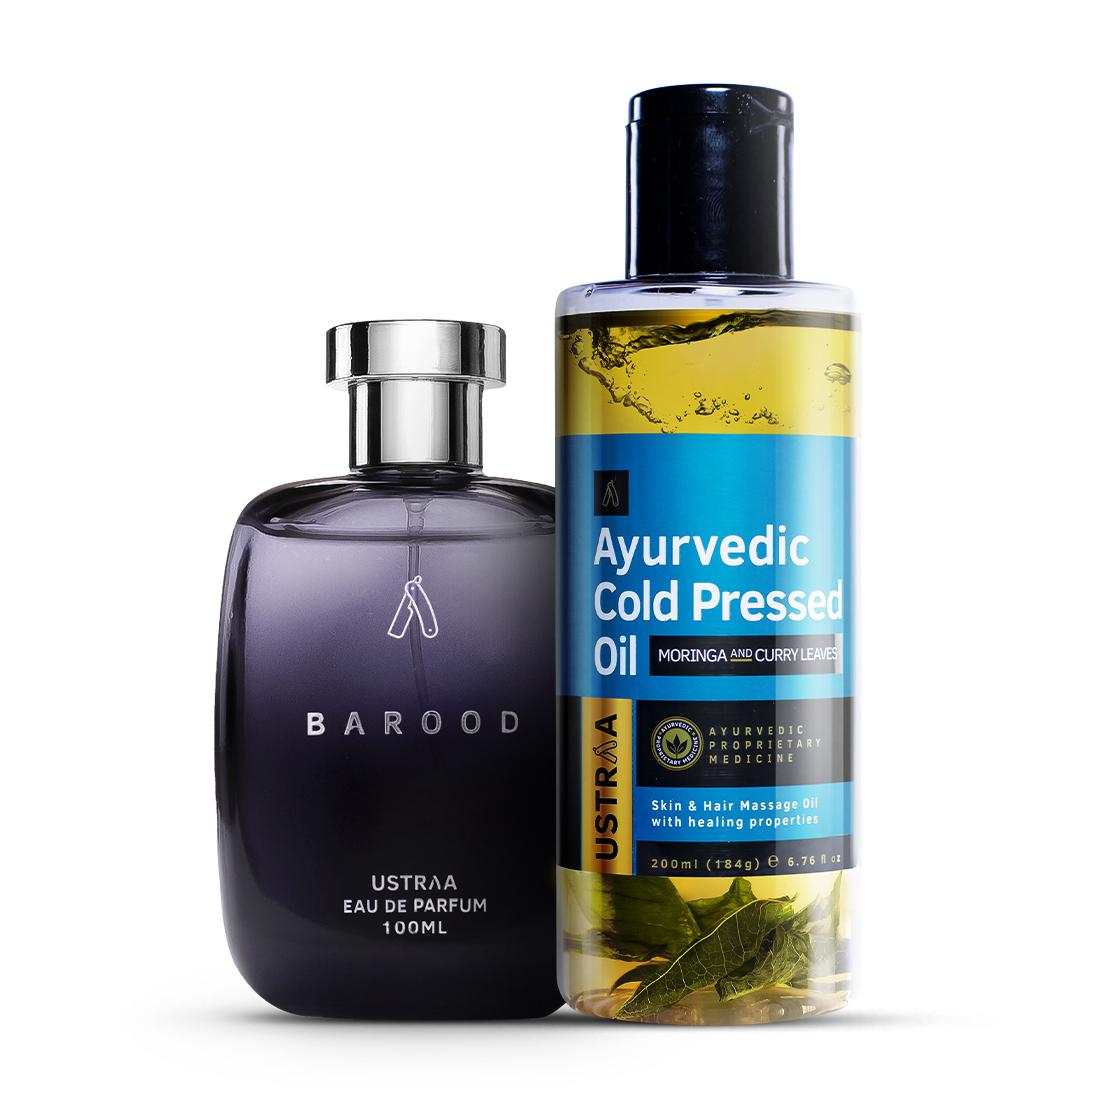 Ayurvedic Cold Pressed Oil & Barood EDP -Perfume for Men Combo